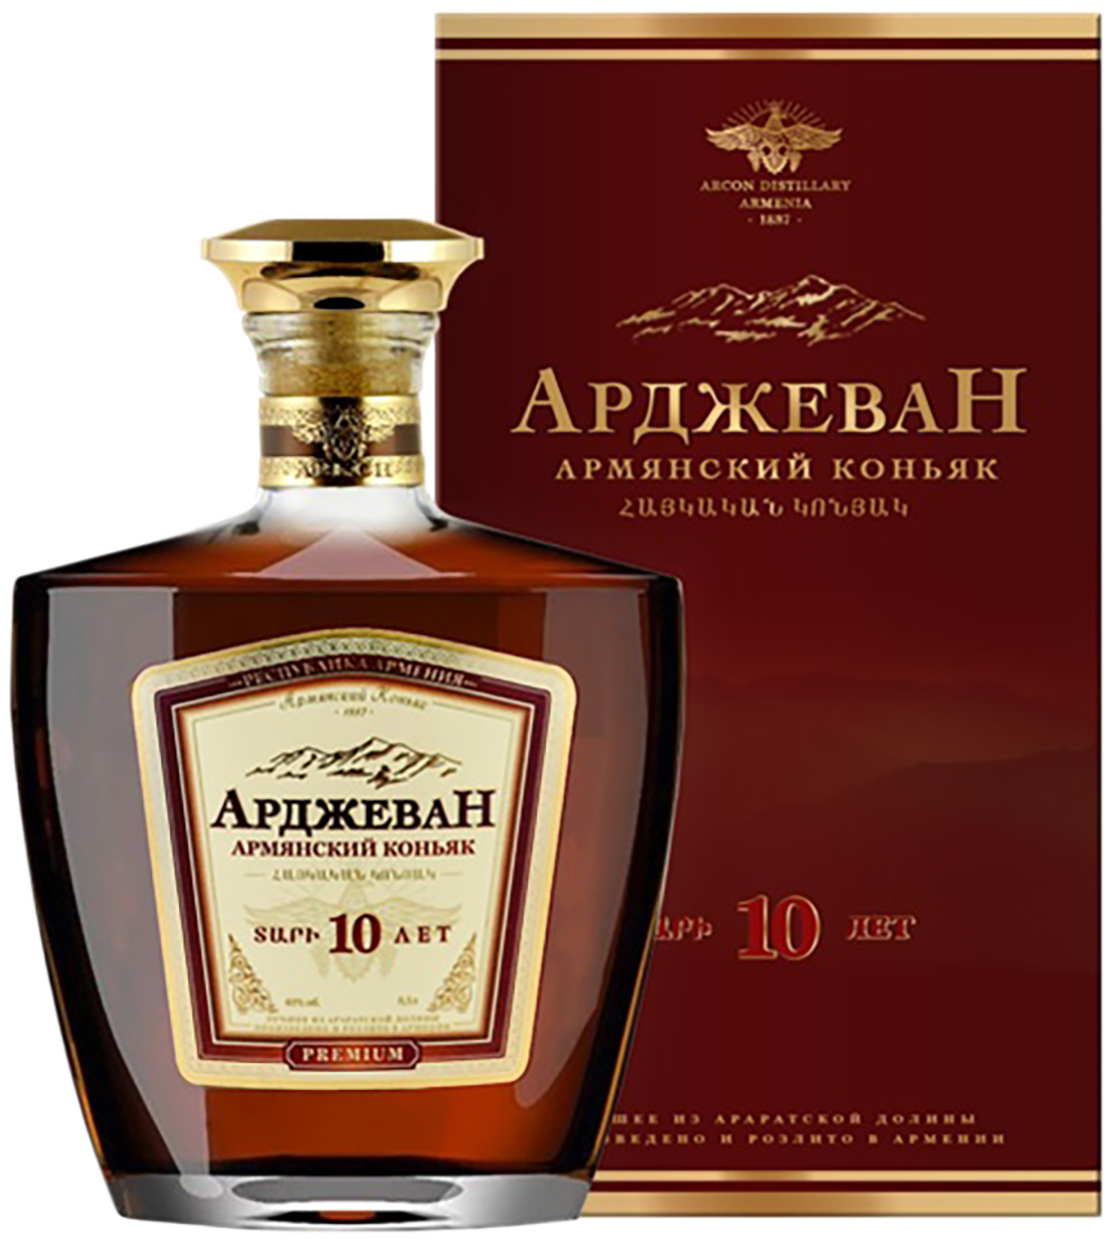 Armenia коньяк 7